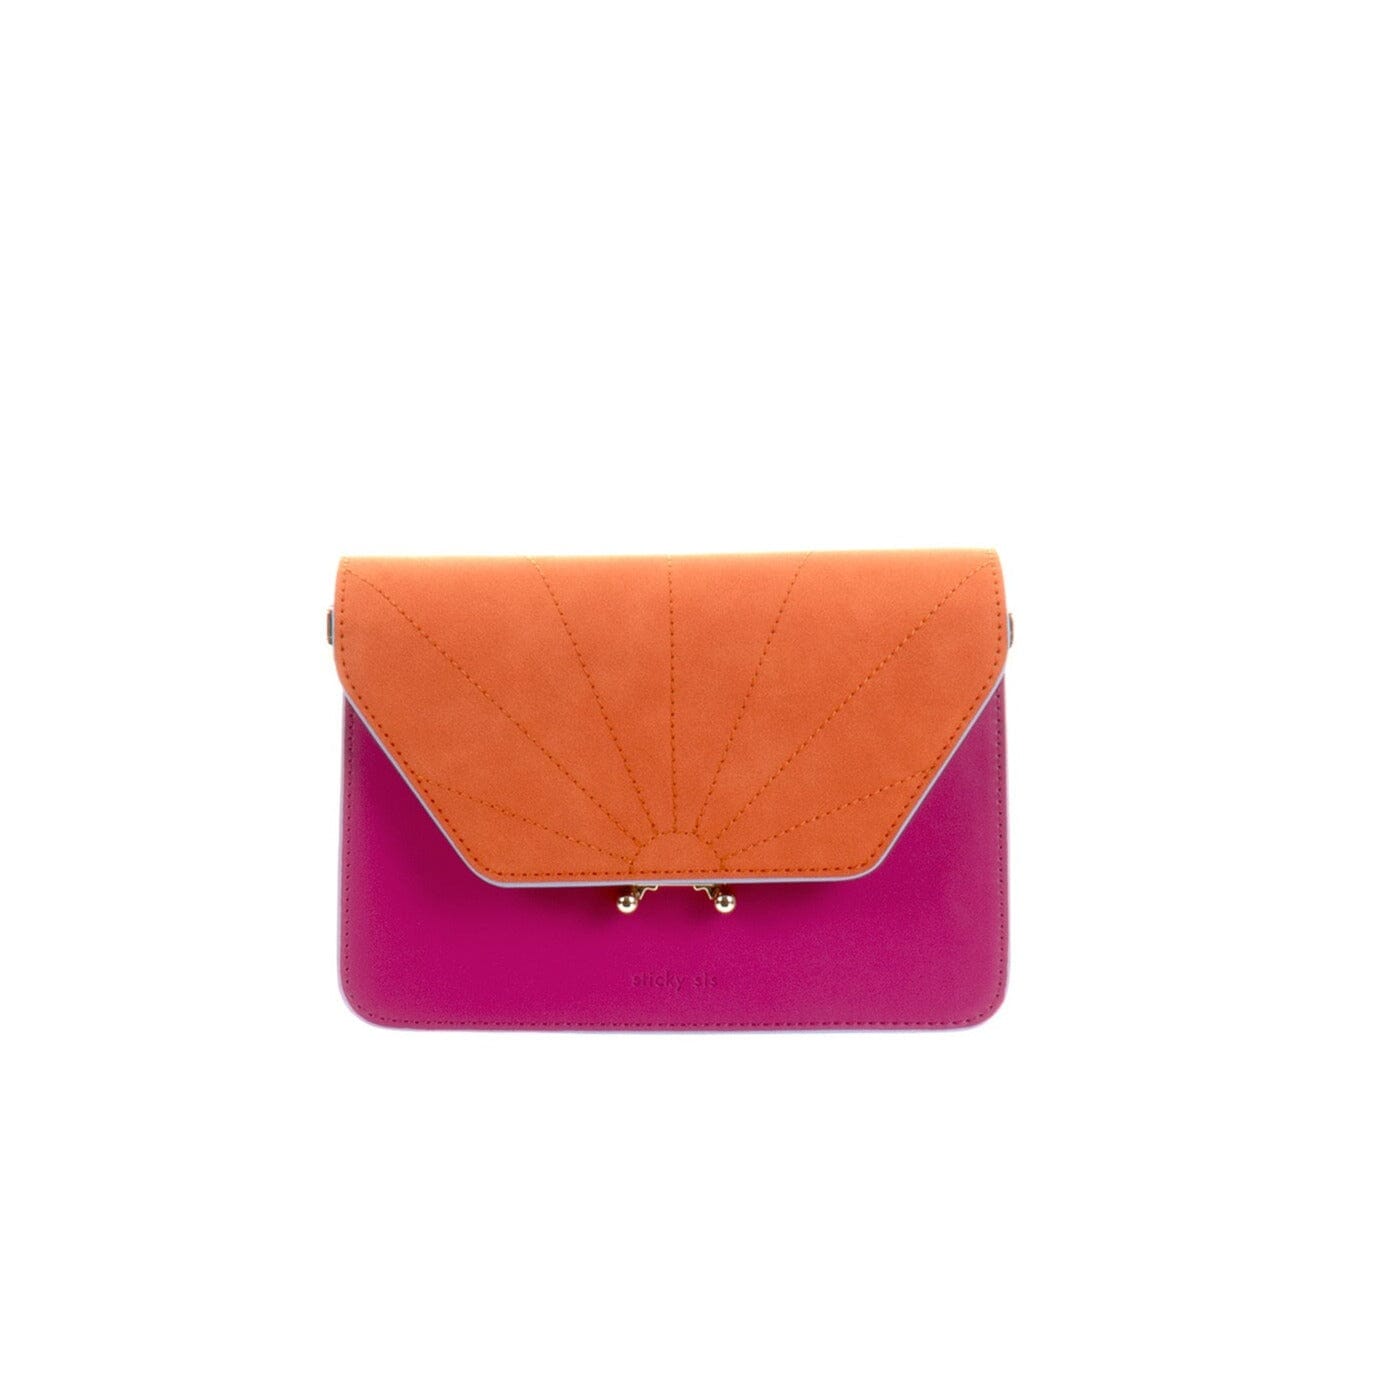 Shoulder Bag "Coloré" Handtaschen, Geldbörsen & Etuis Sticky Sis Club positano purple + arancia orange 